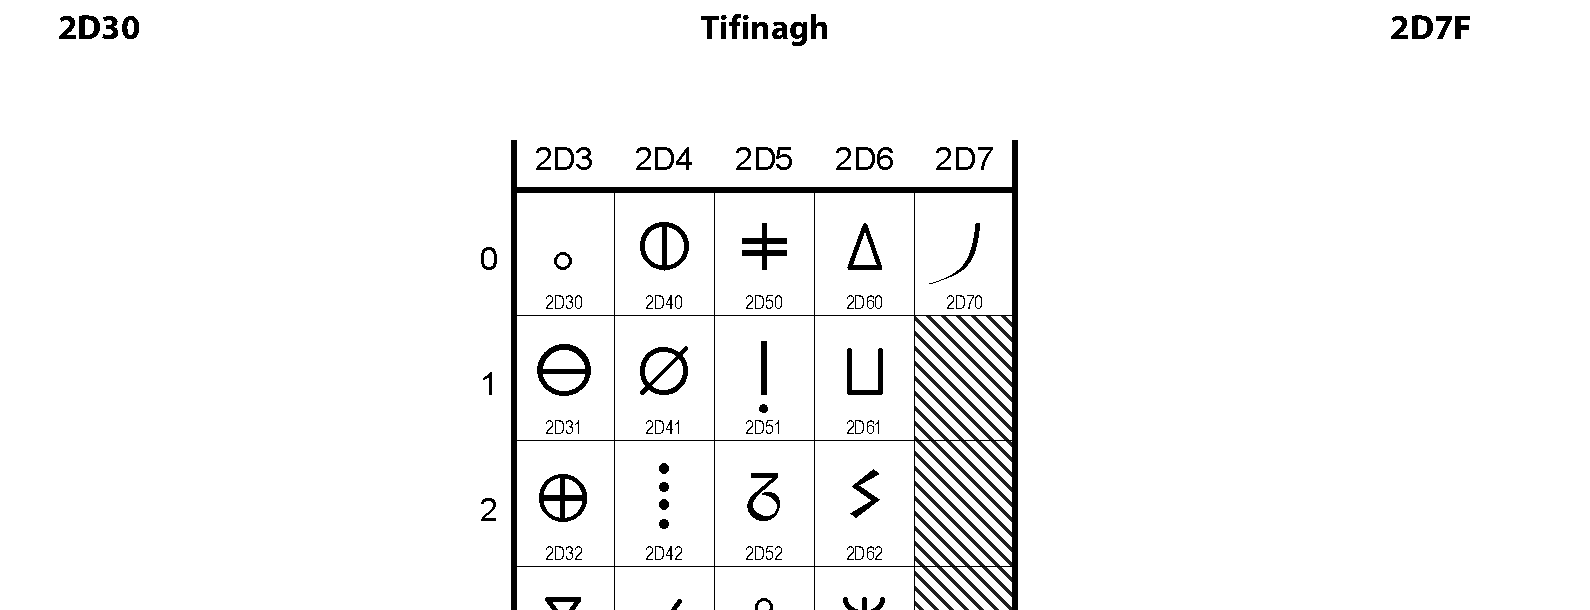 Unicode - Tifinagh